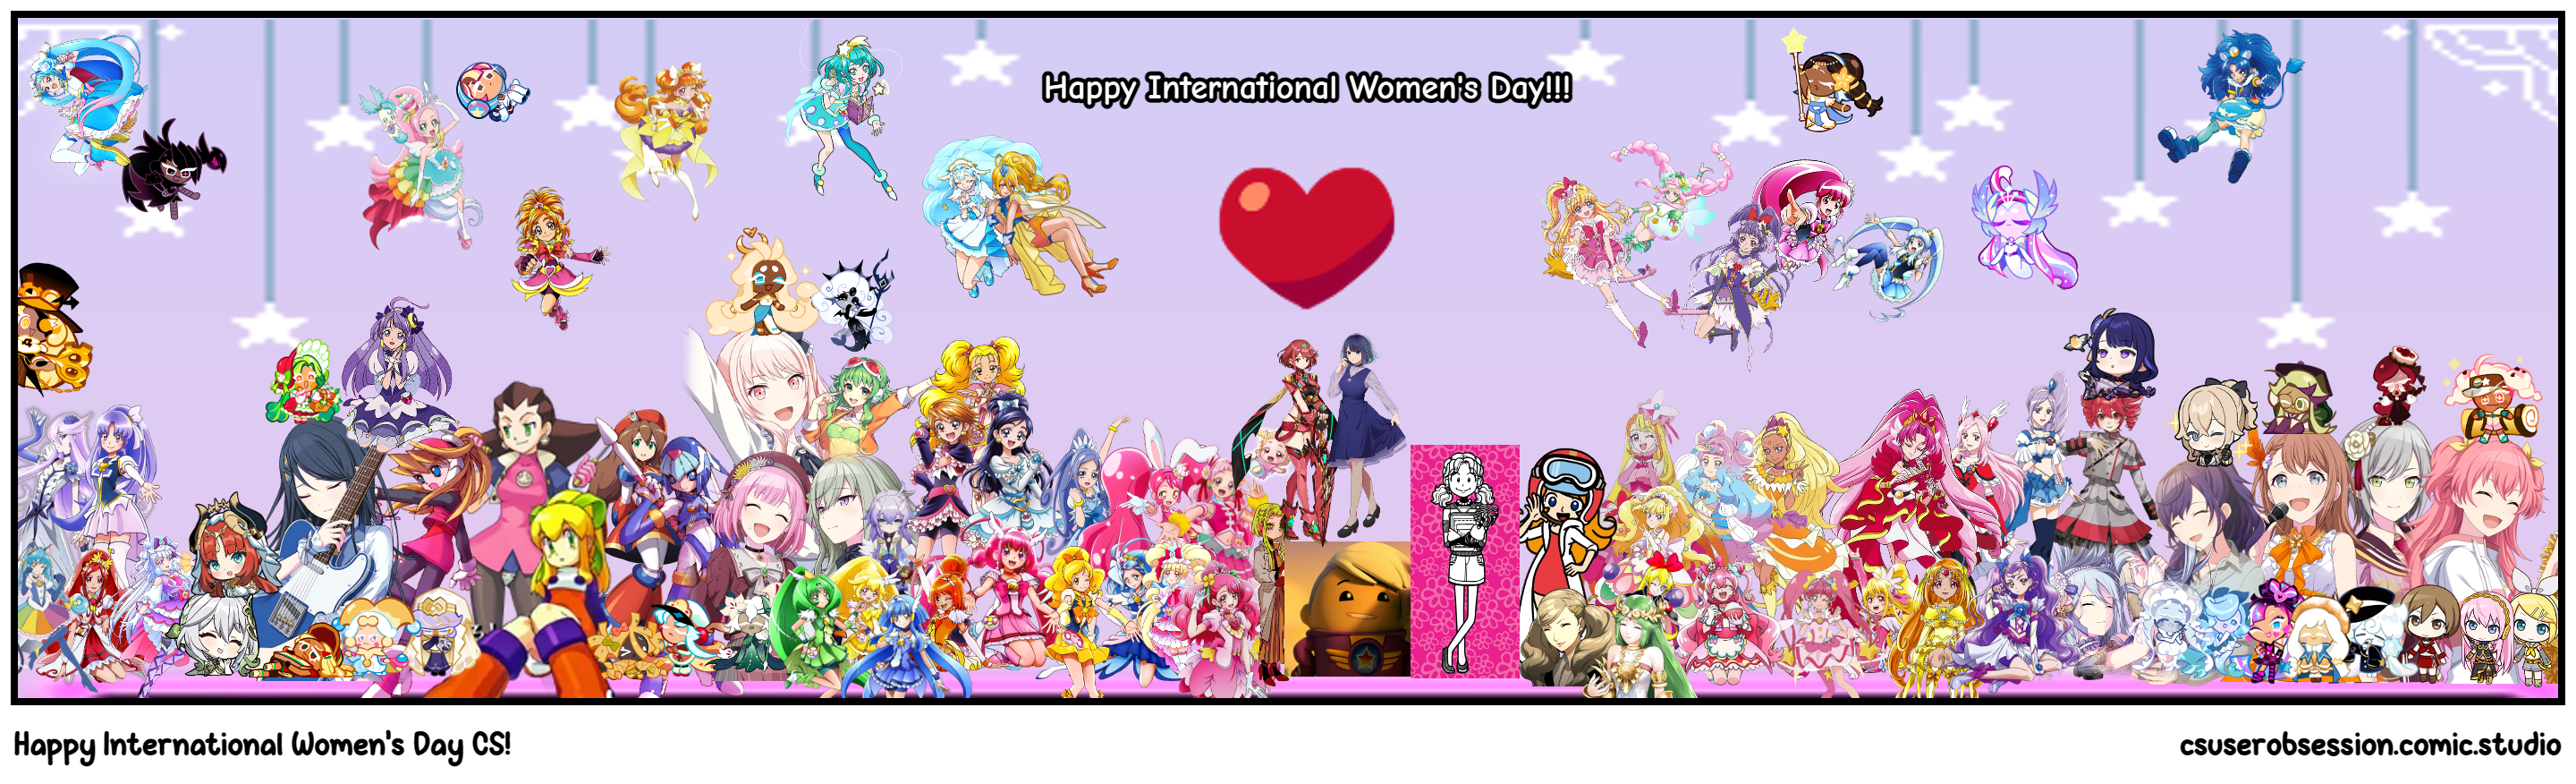 Happy International Women's Day CS!